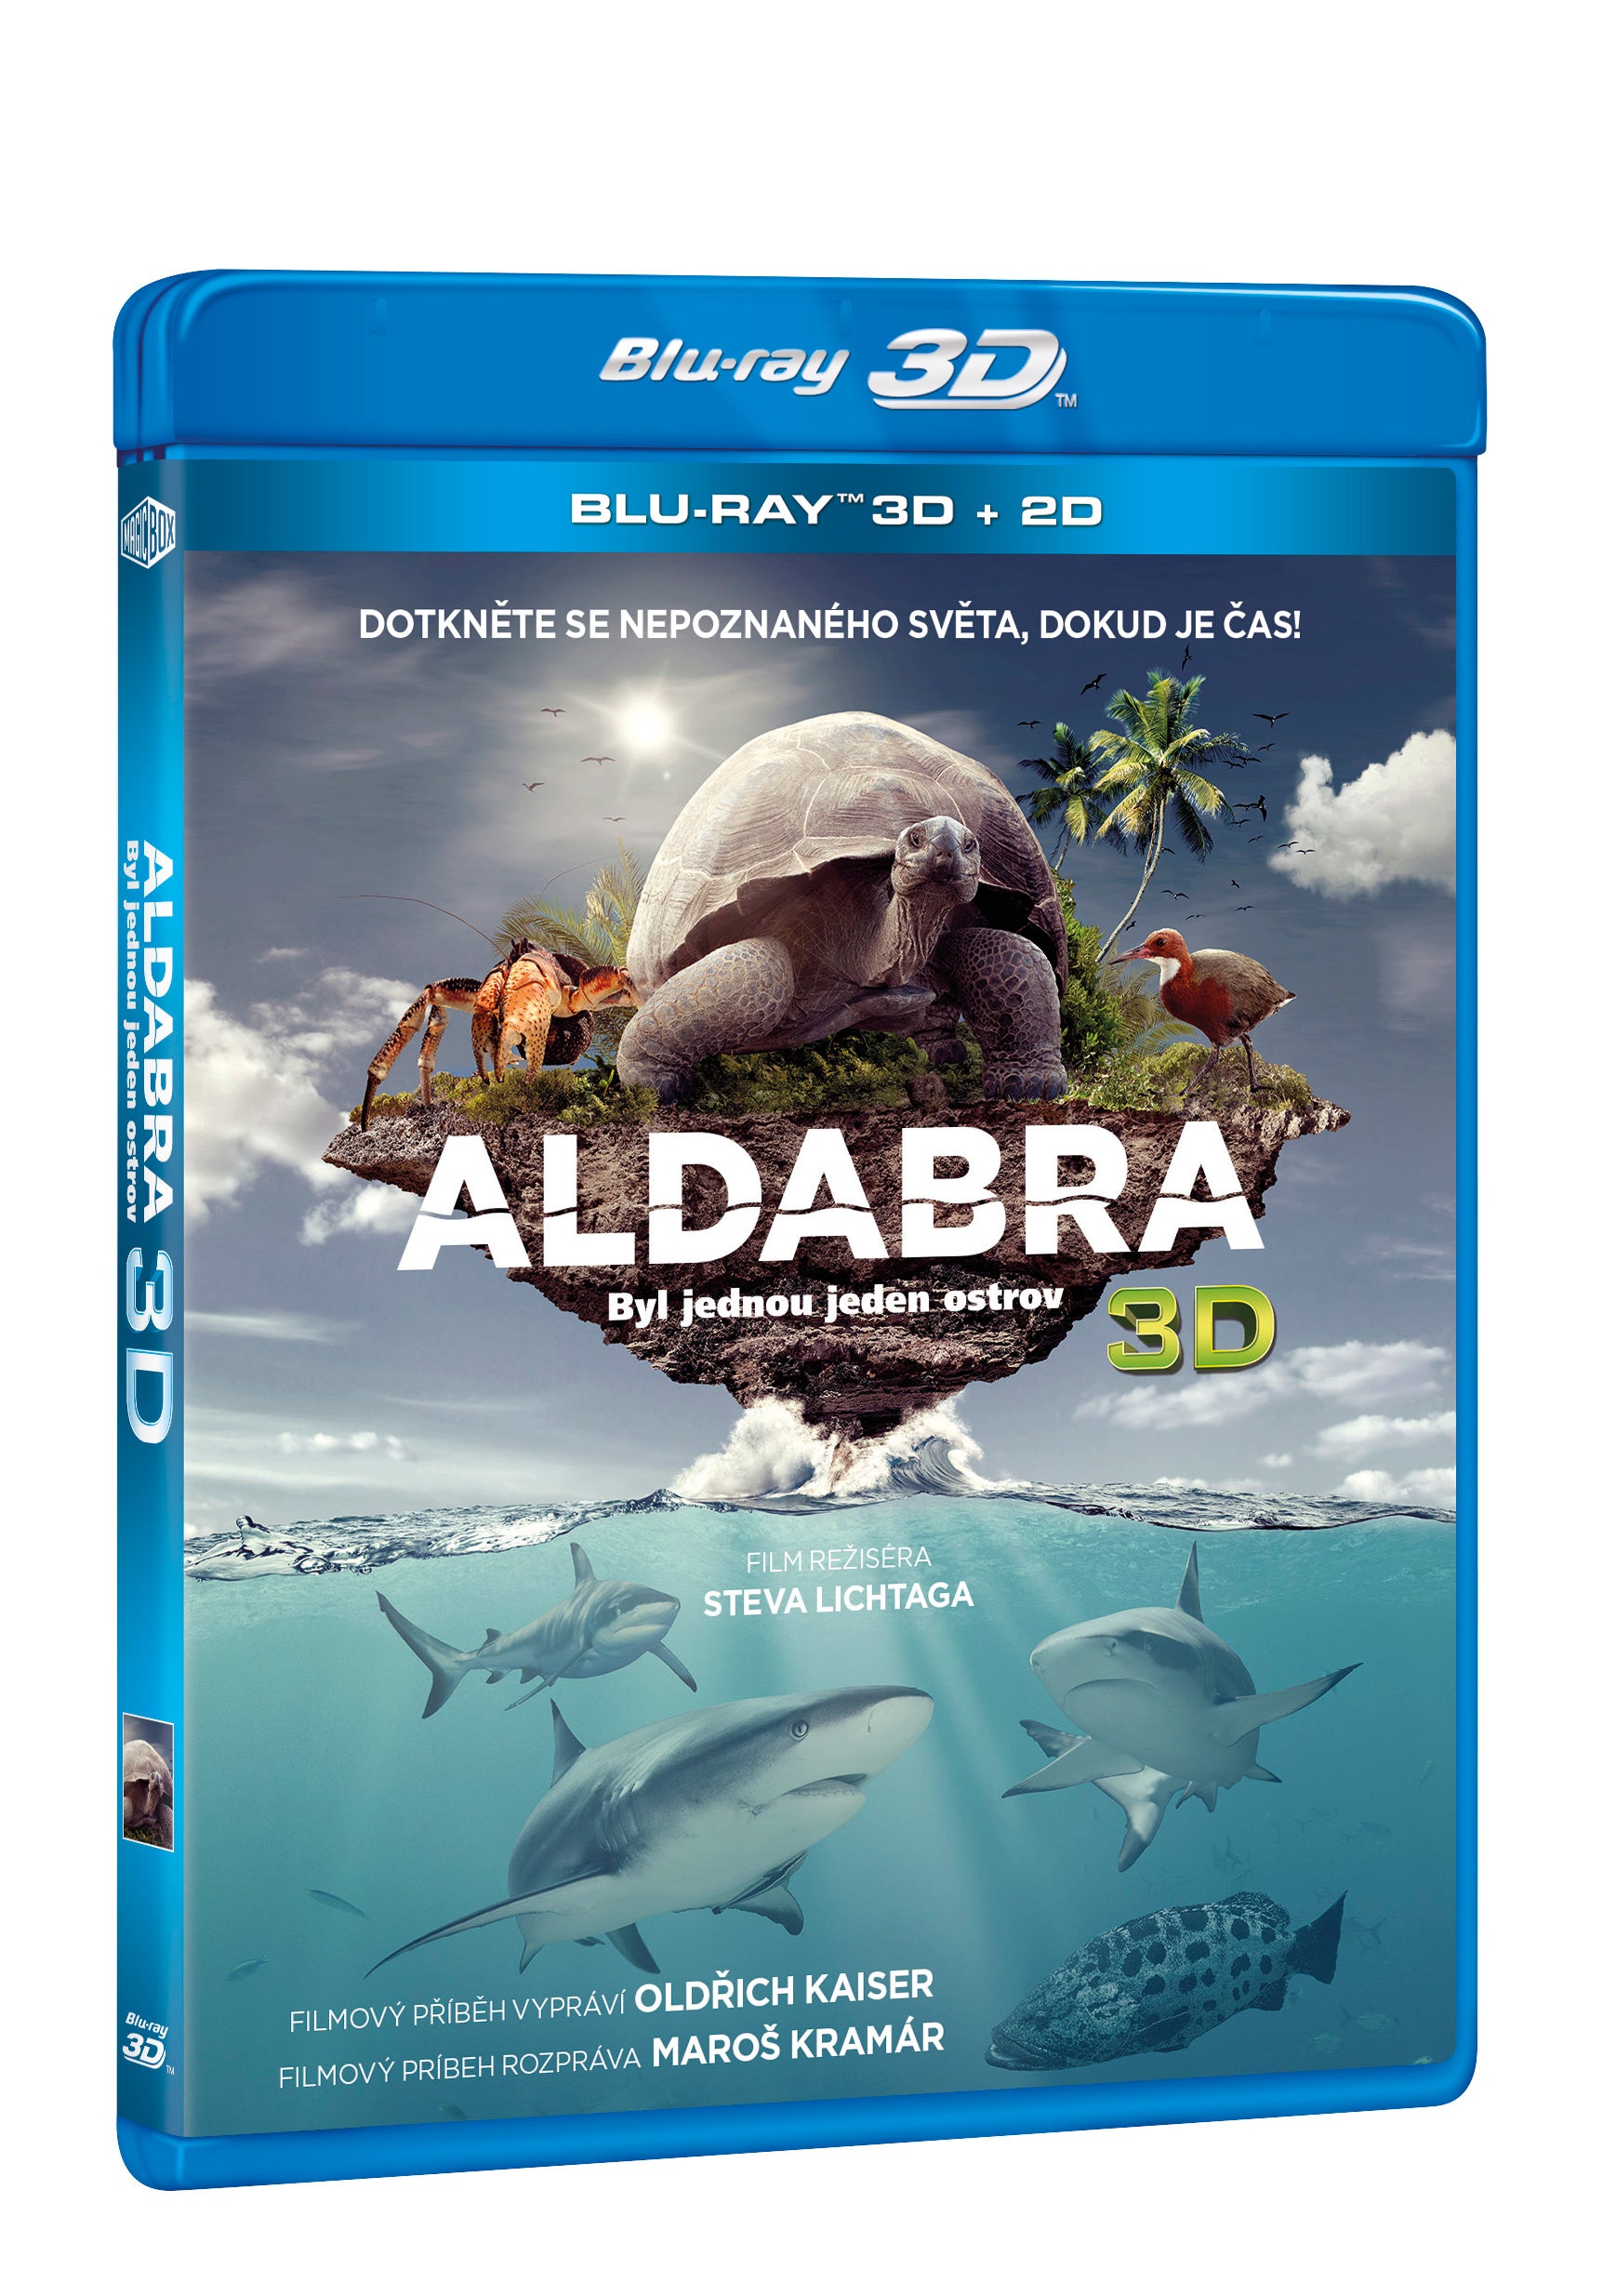 Aldabra: Byl jednou jeden ostrov BD (3D+2D) / Aldabra: Byl jednou jeden ostrov - Czech version